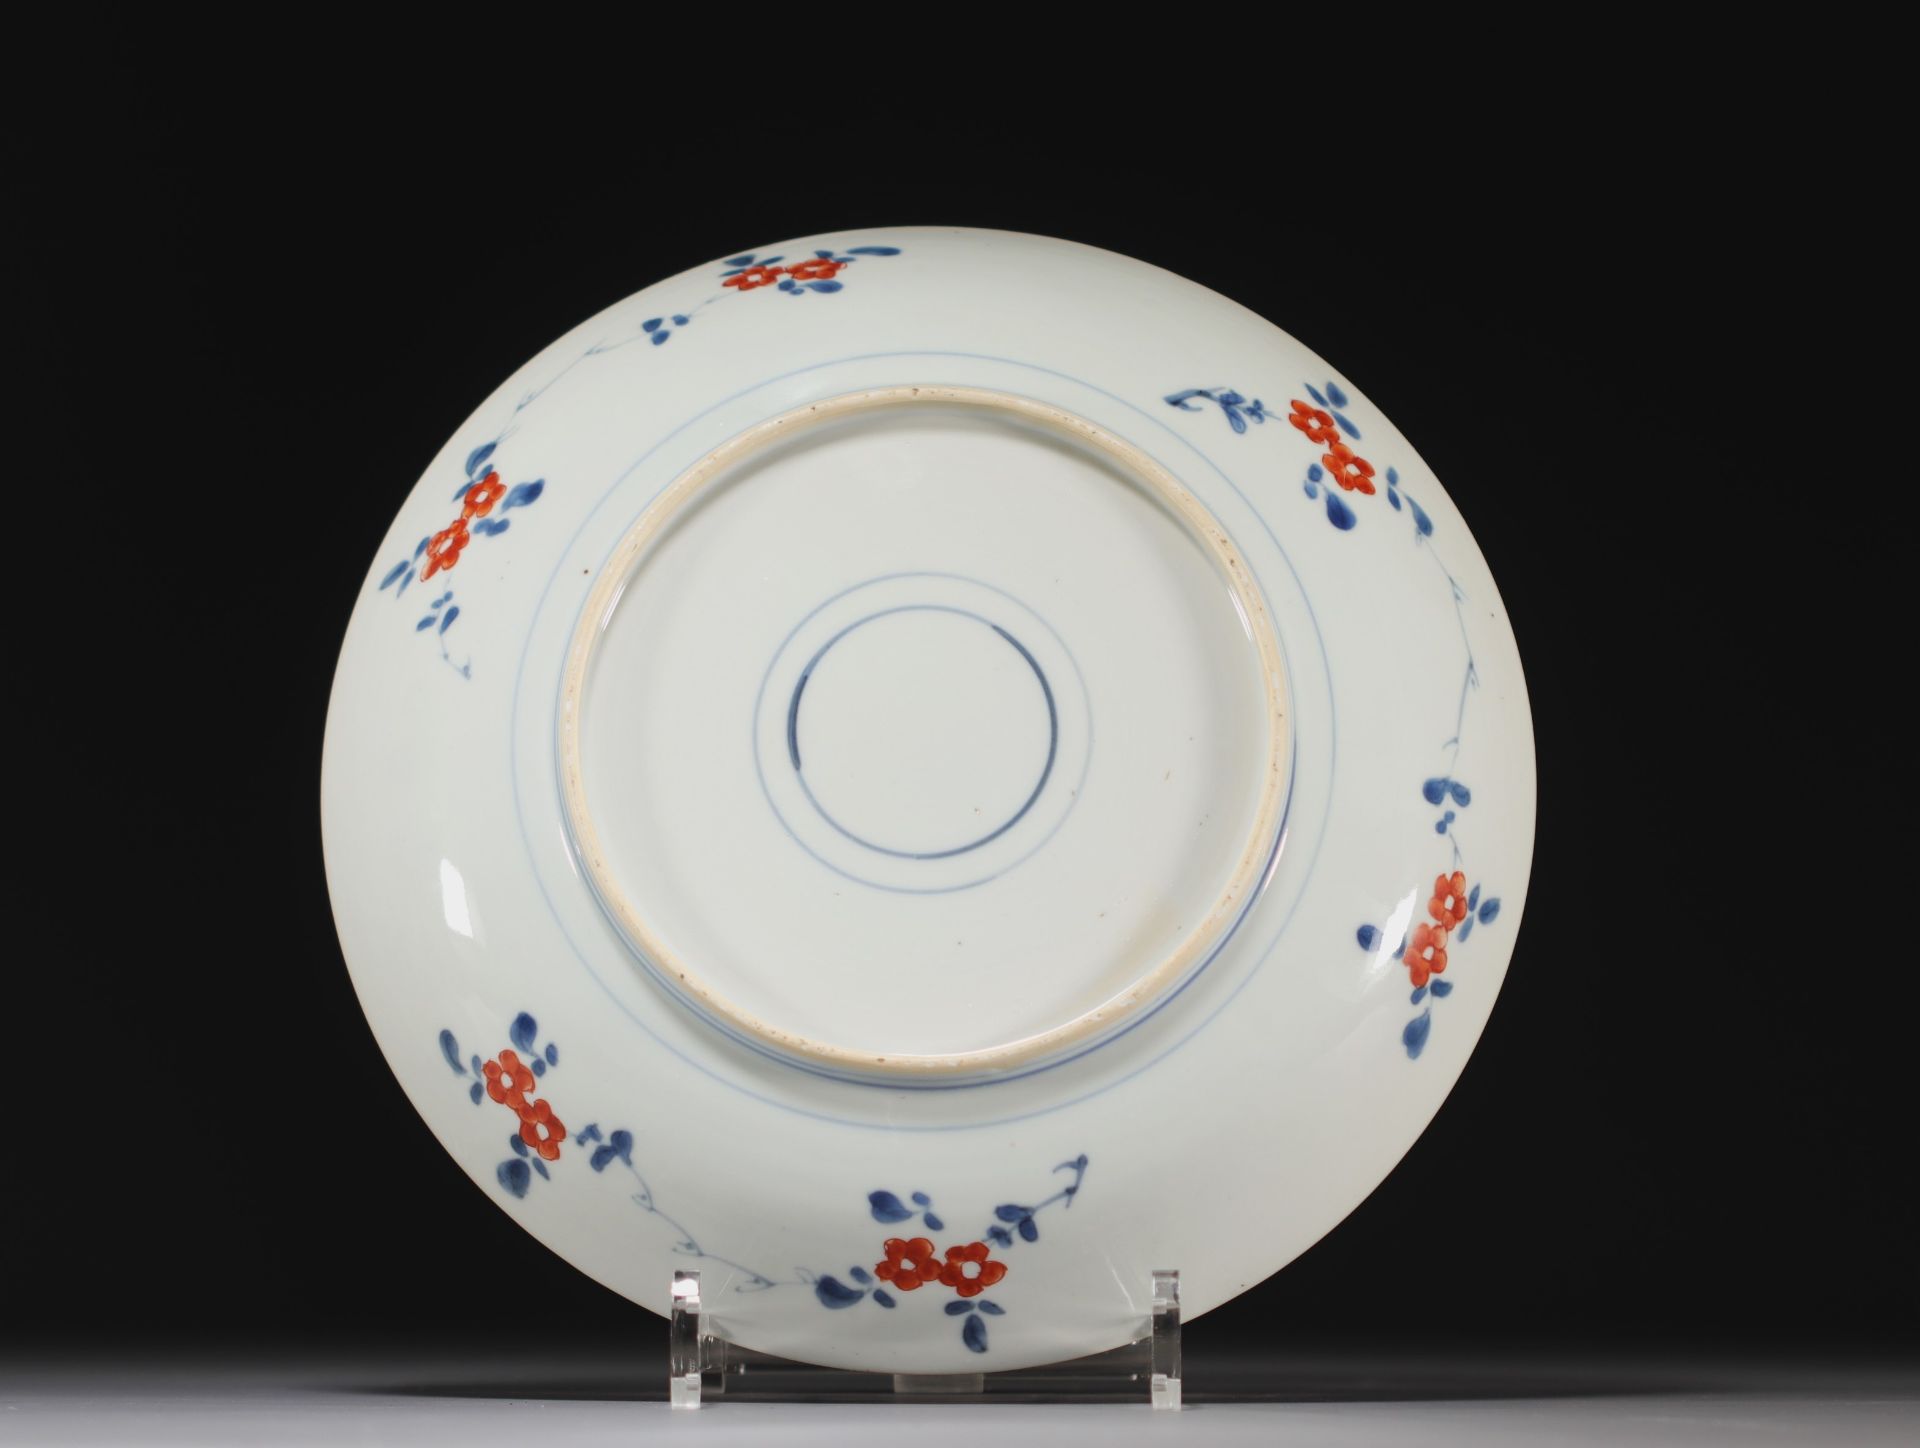 China - Porcelain plate, Imari design, 18th century. - Image 2 of 2